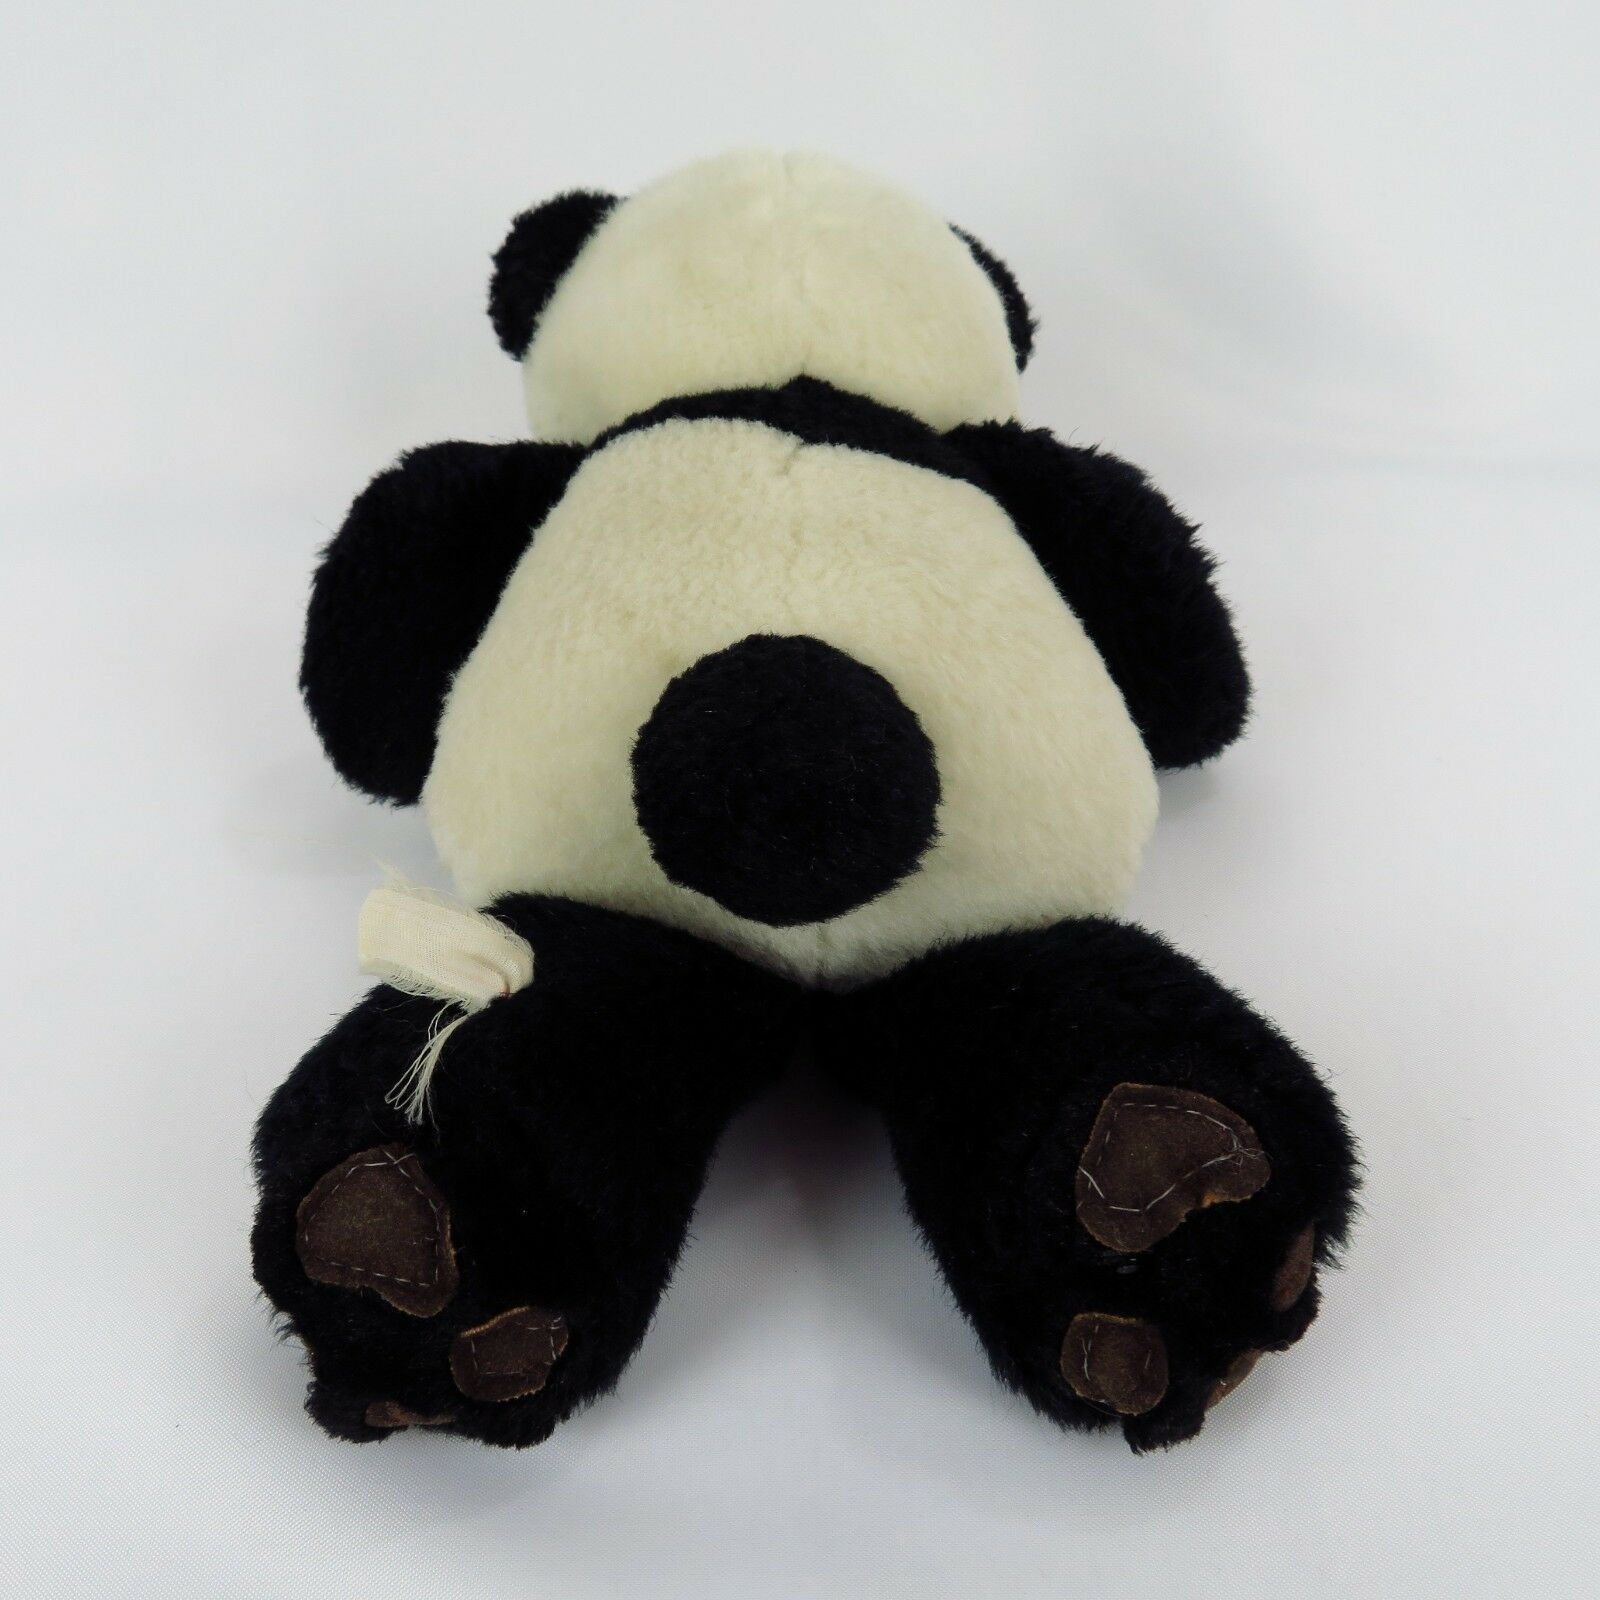 Vintage Panda Teddy Bear Plush Stuffed Animal Toy Doll Black White Brown - At Grandma's Table